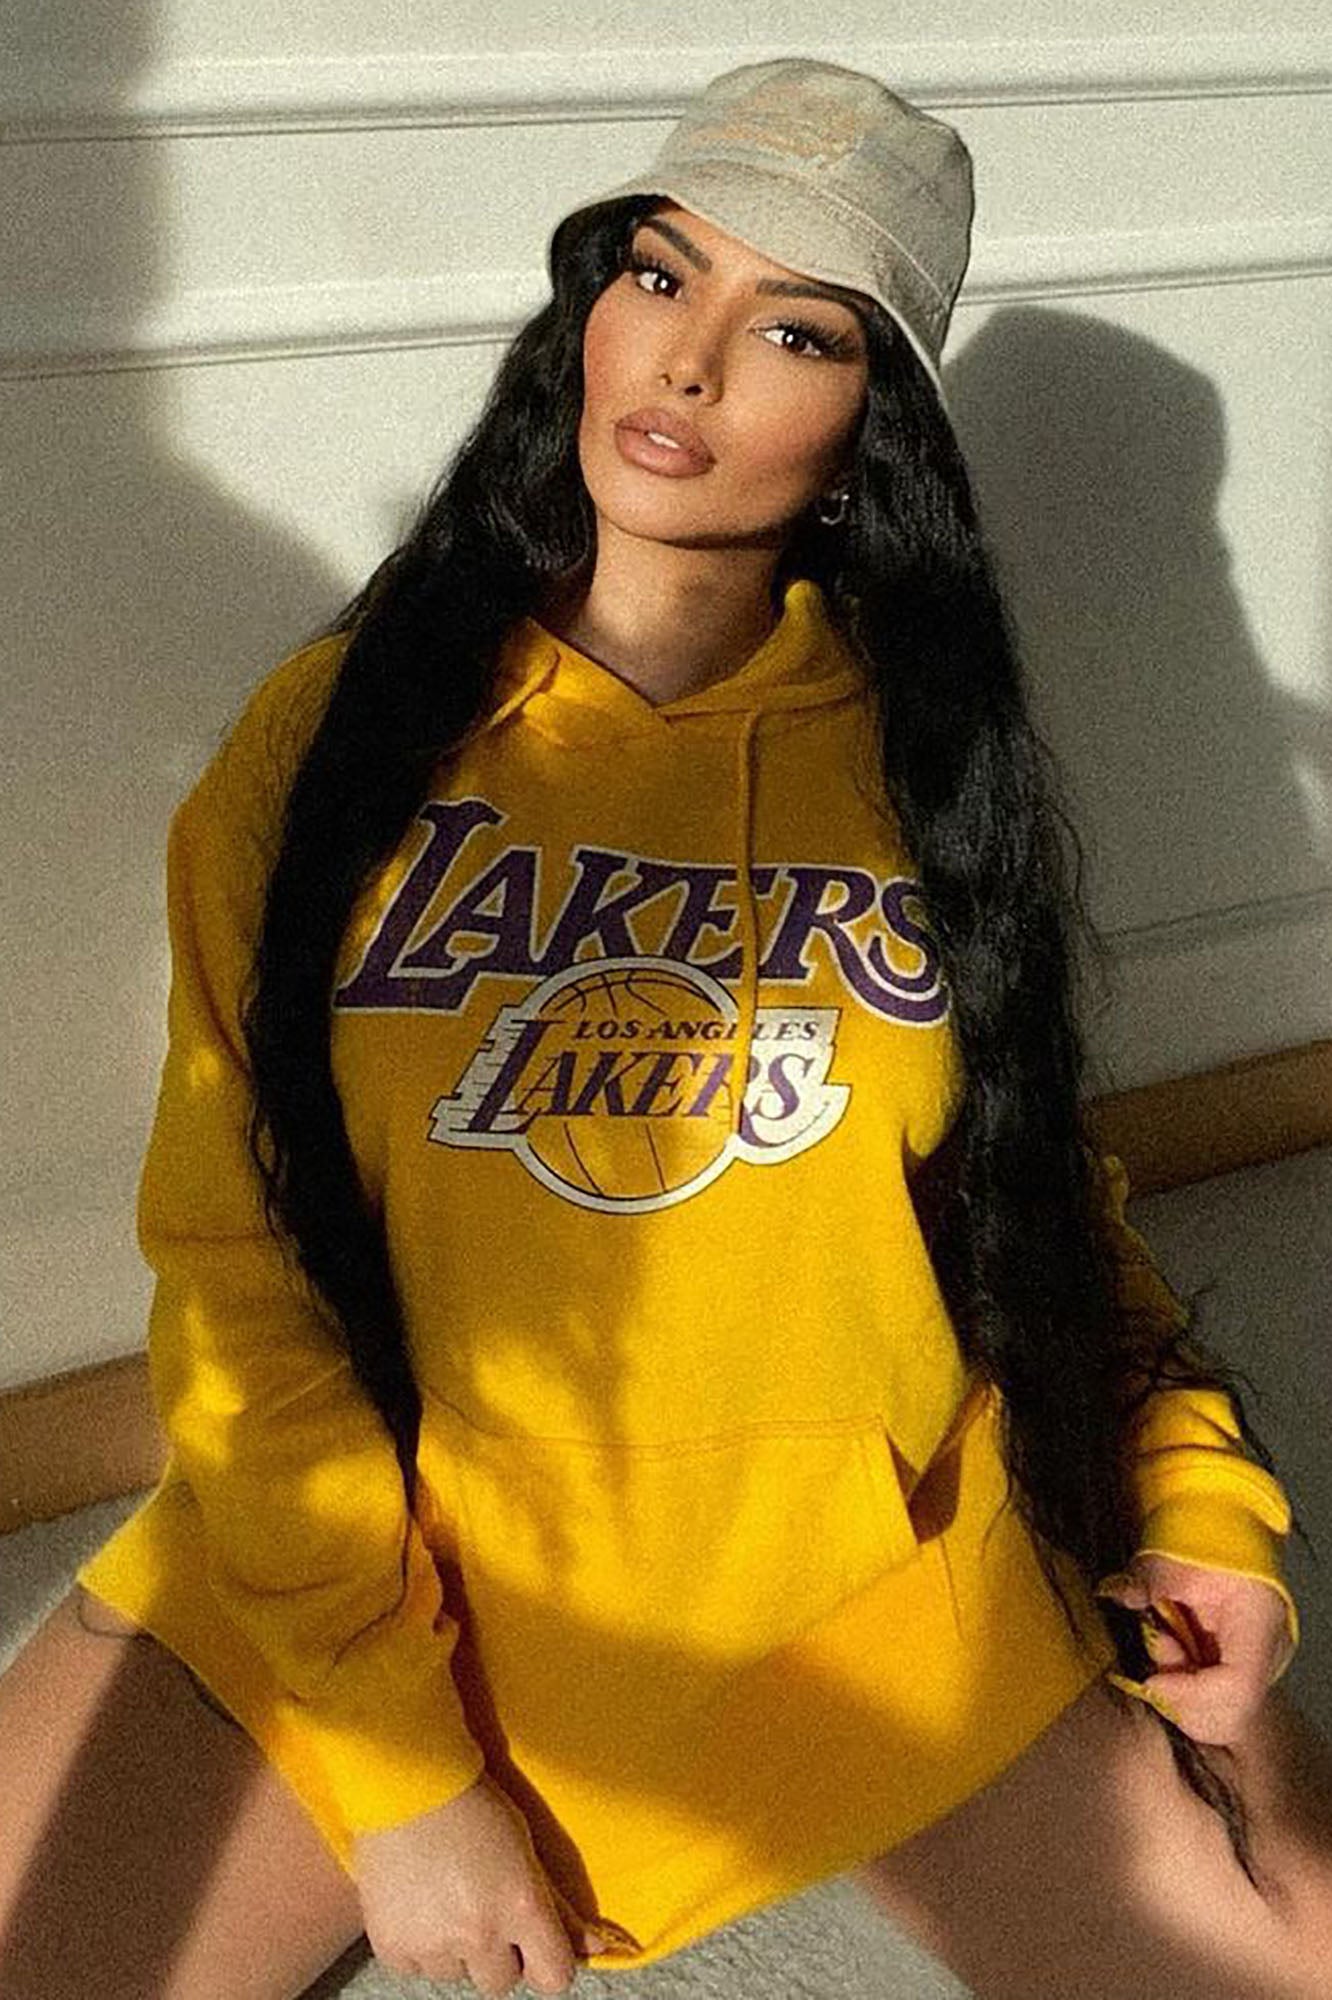 Los Angeles Lakers Post Up Hoodie - Purple, Fashion Nova, Mens Graphic  Tees